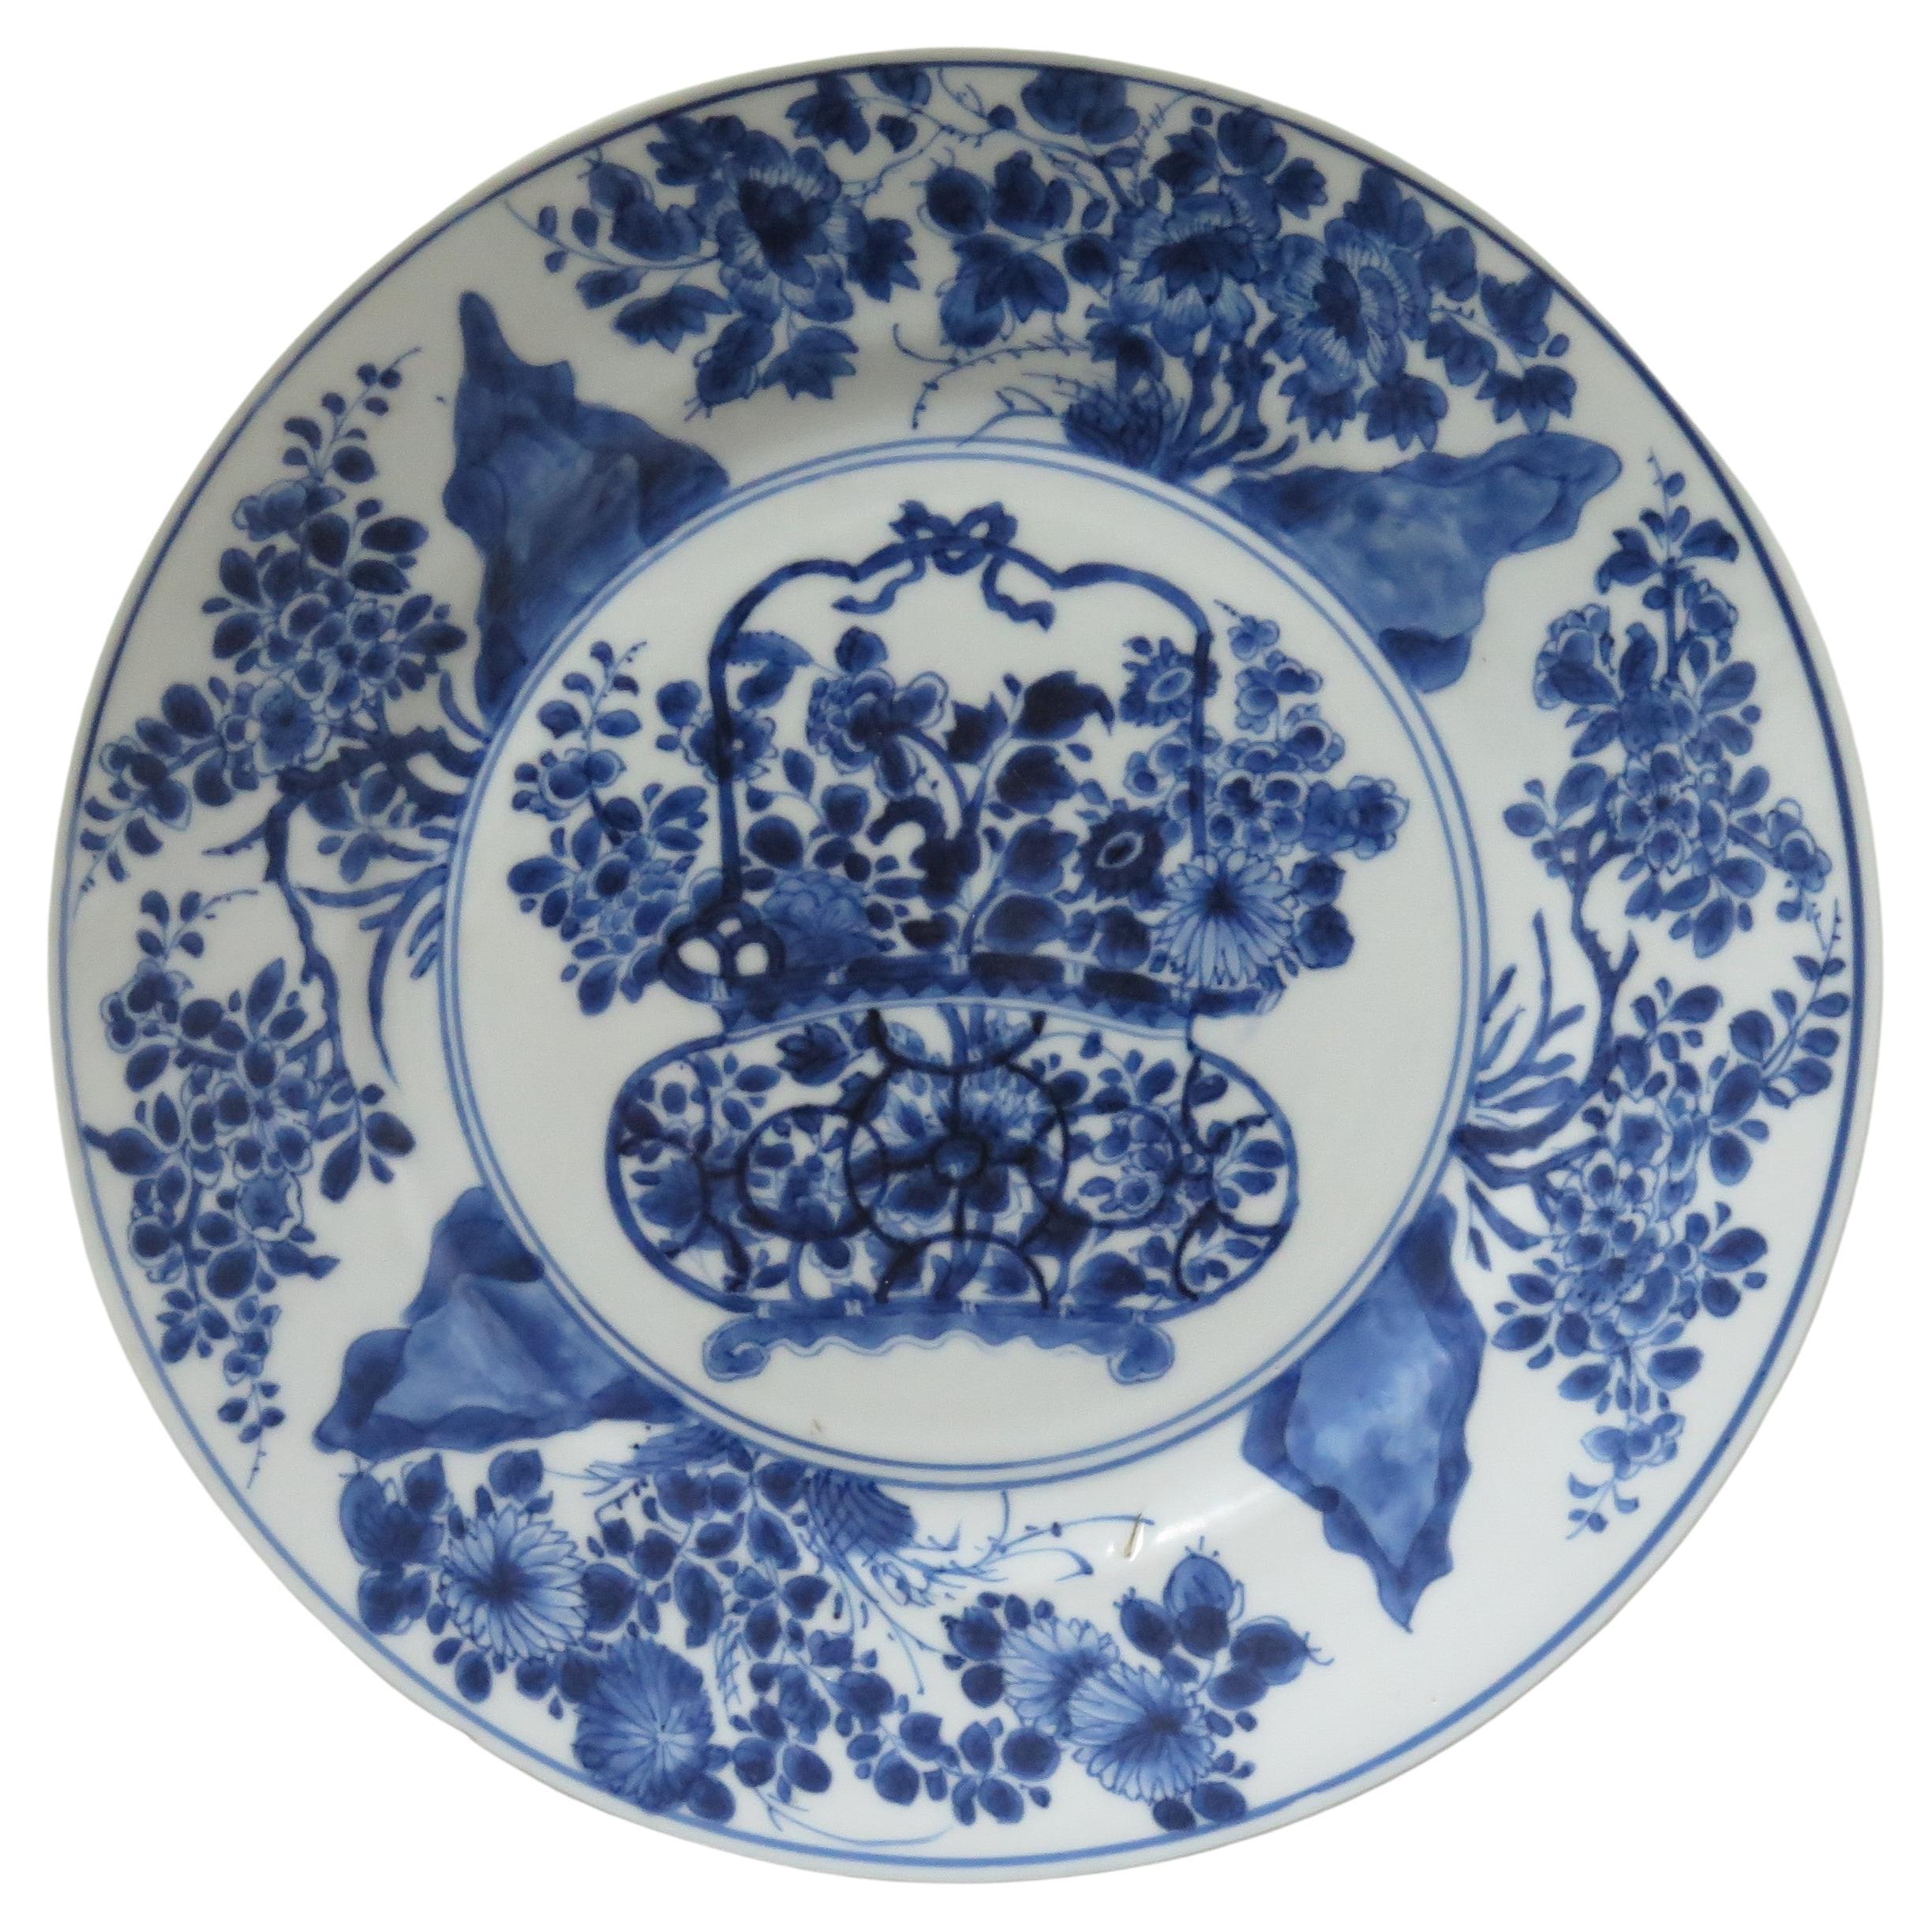 Kangxi Marked Chinese Large Plate Porcelain Blue & White Flower Bask, circa 1700